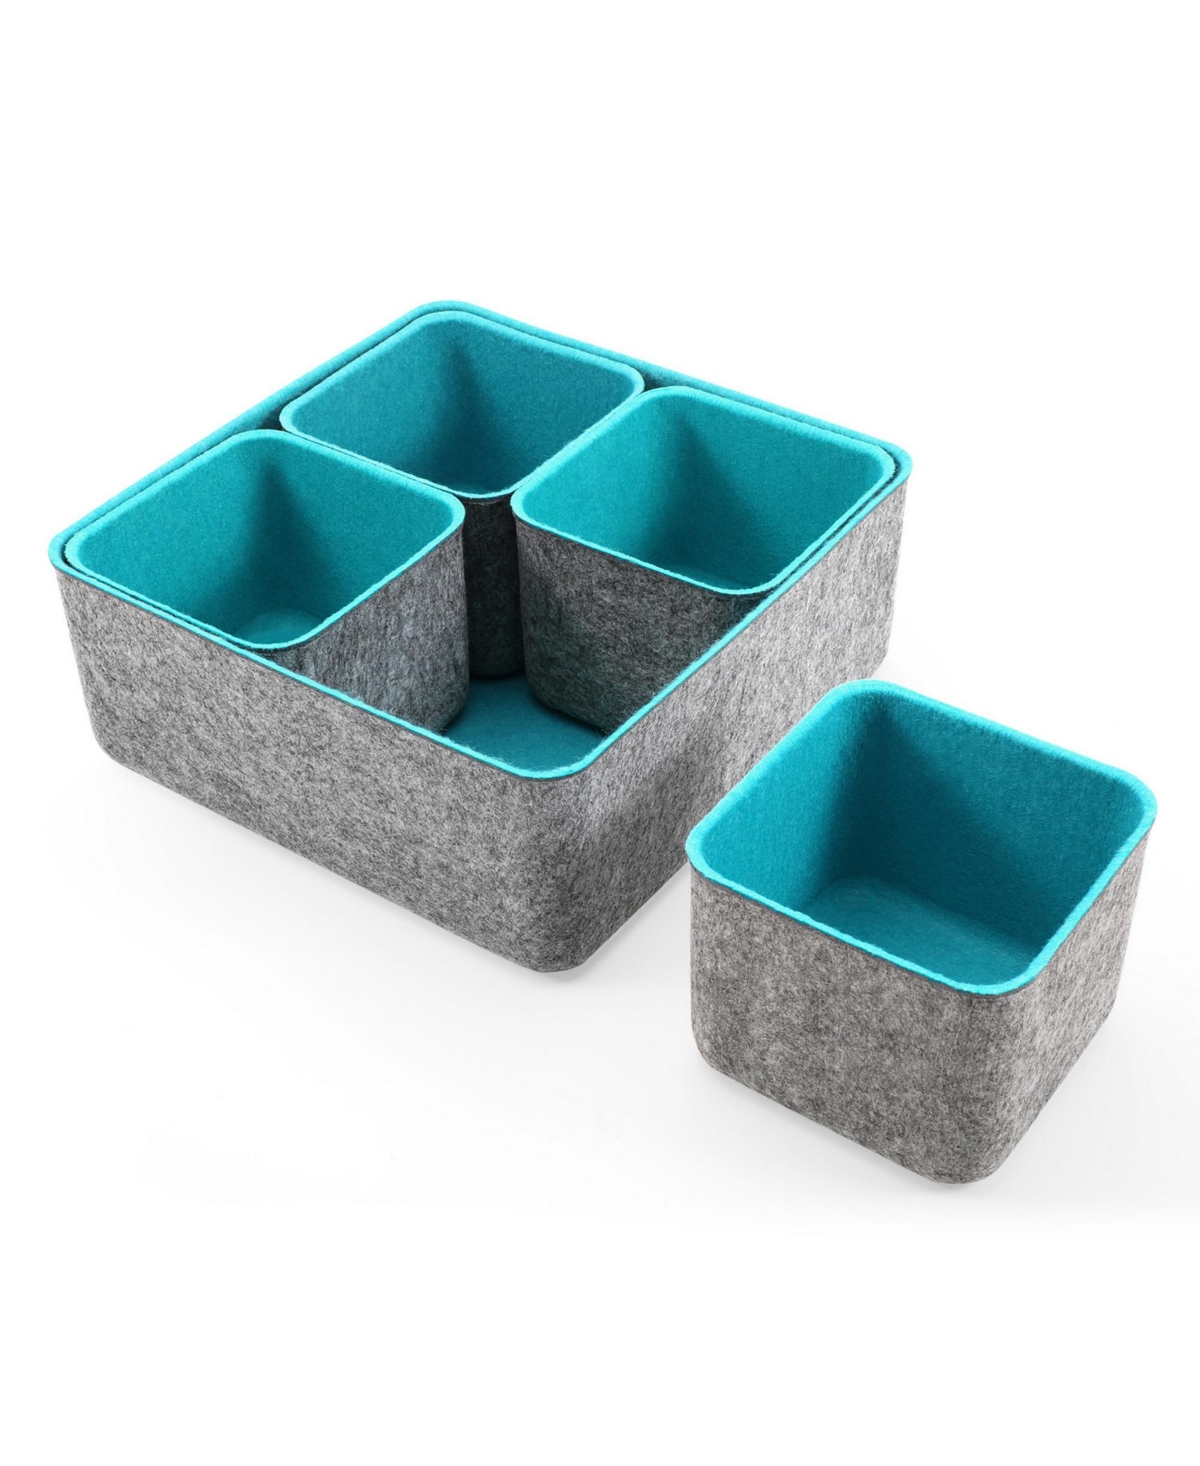 5 Piece Square Felt Storage Bin Set - Turquoise